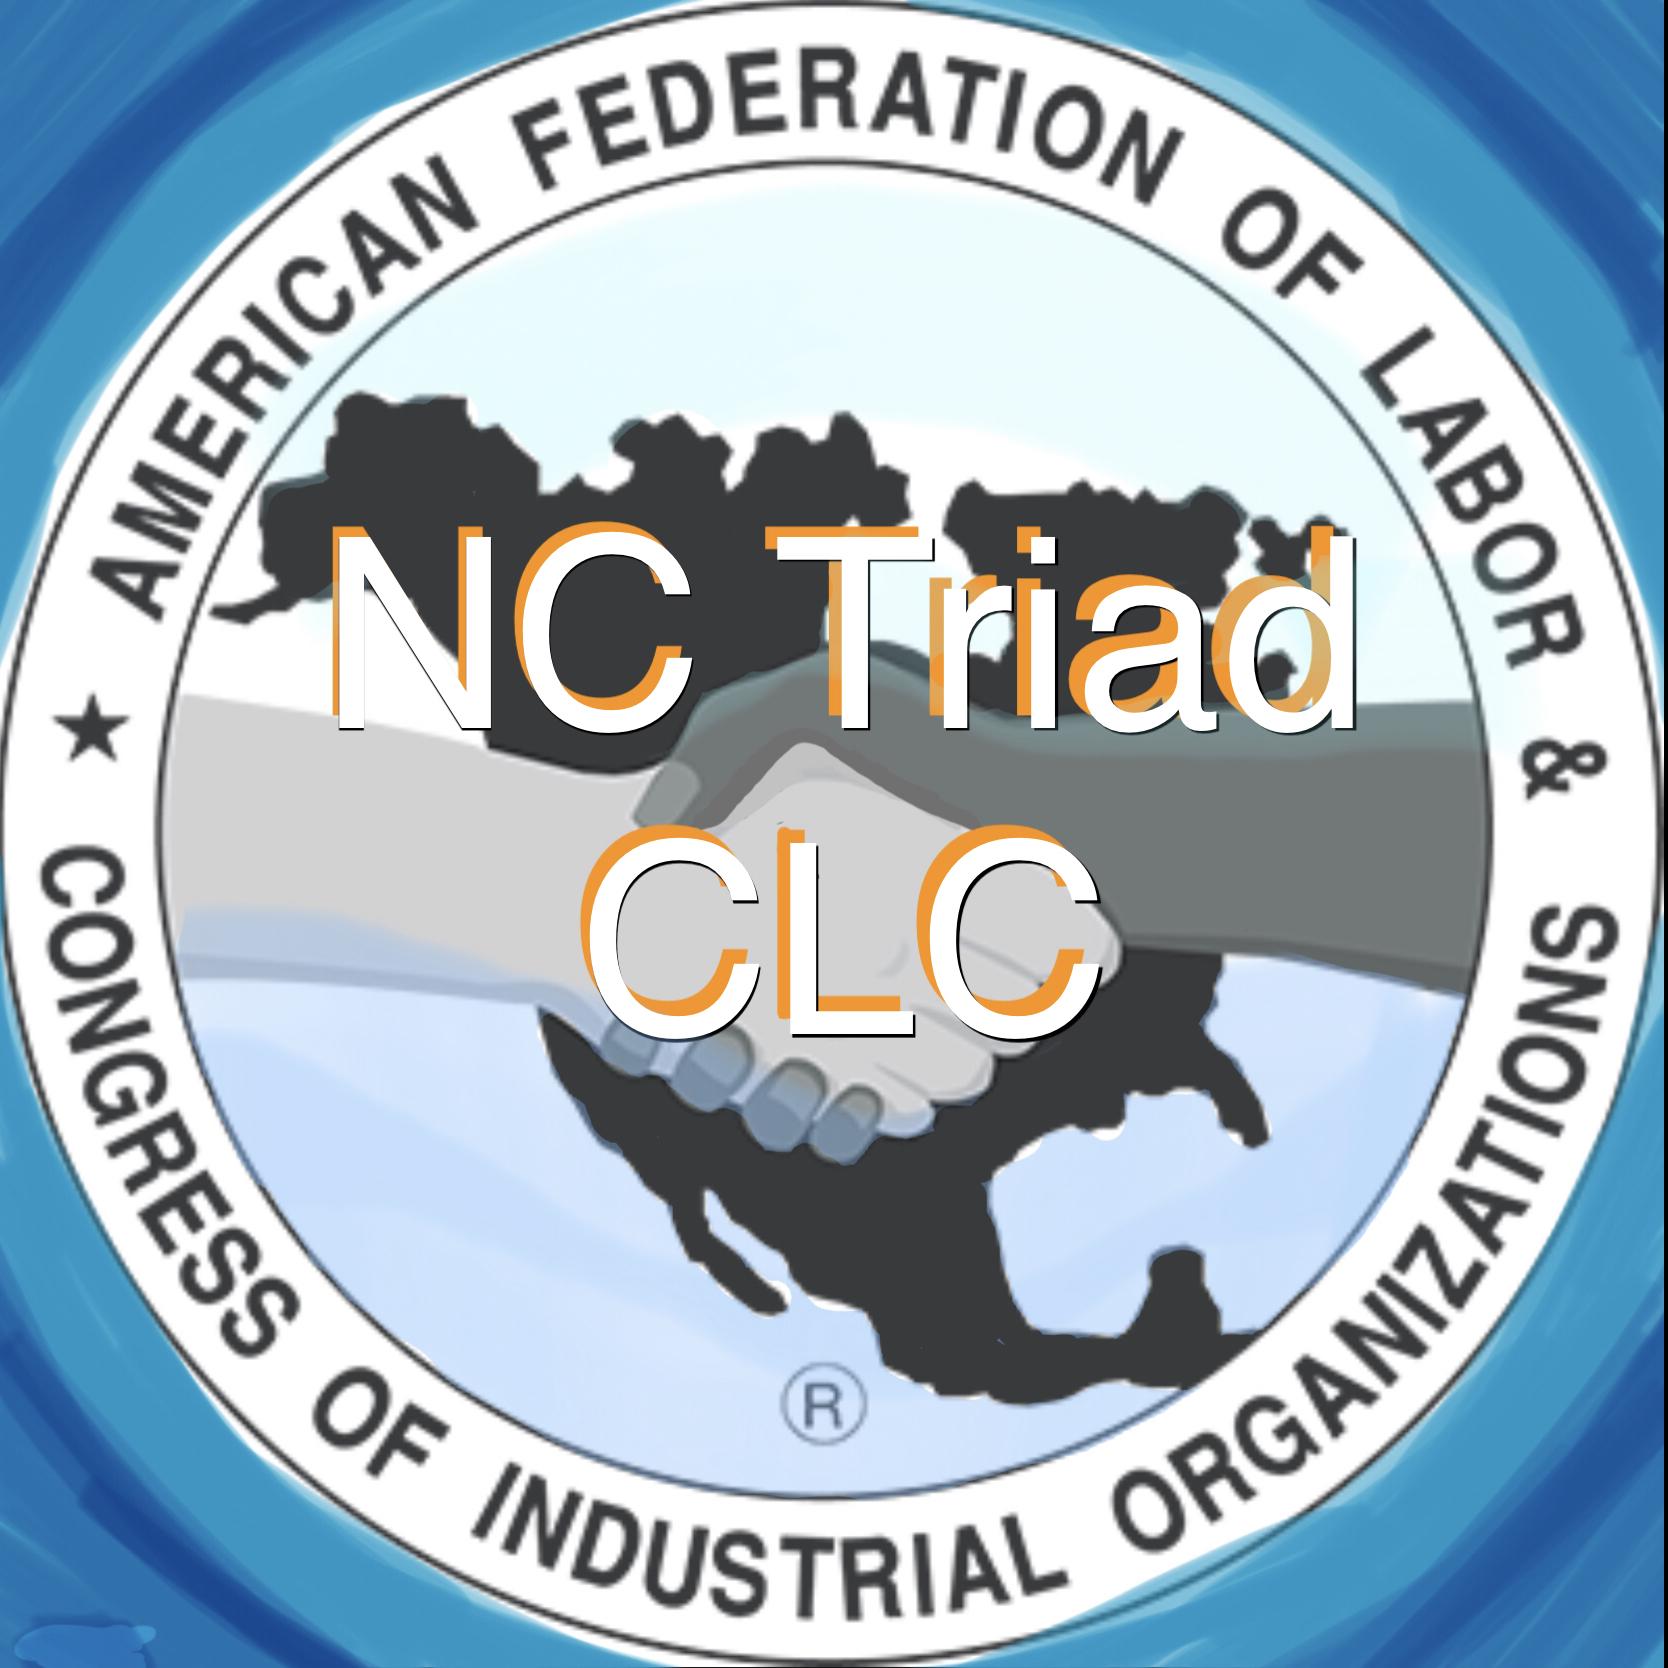 Triad Central Labor Council